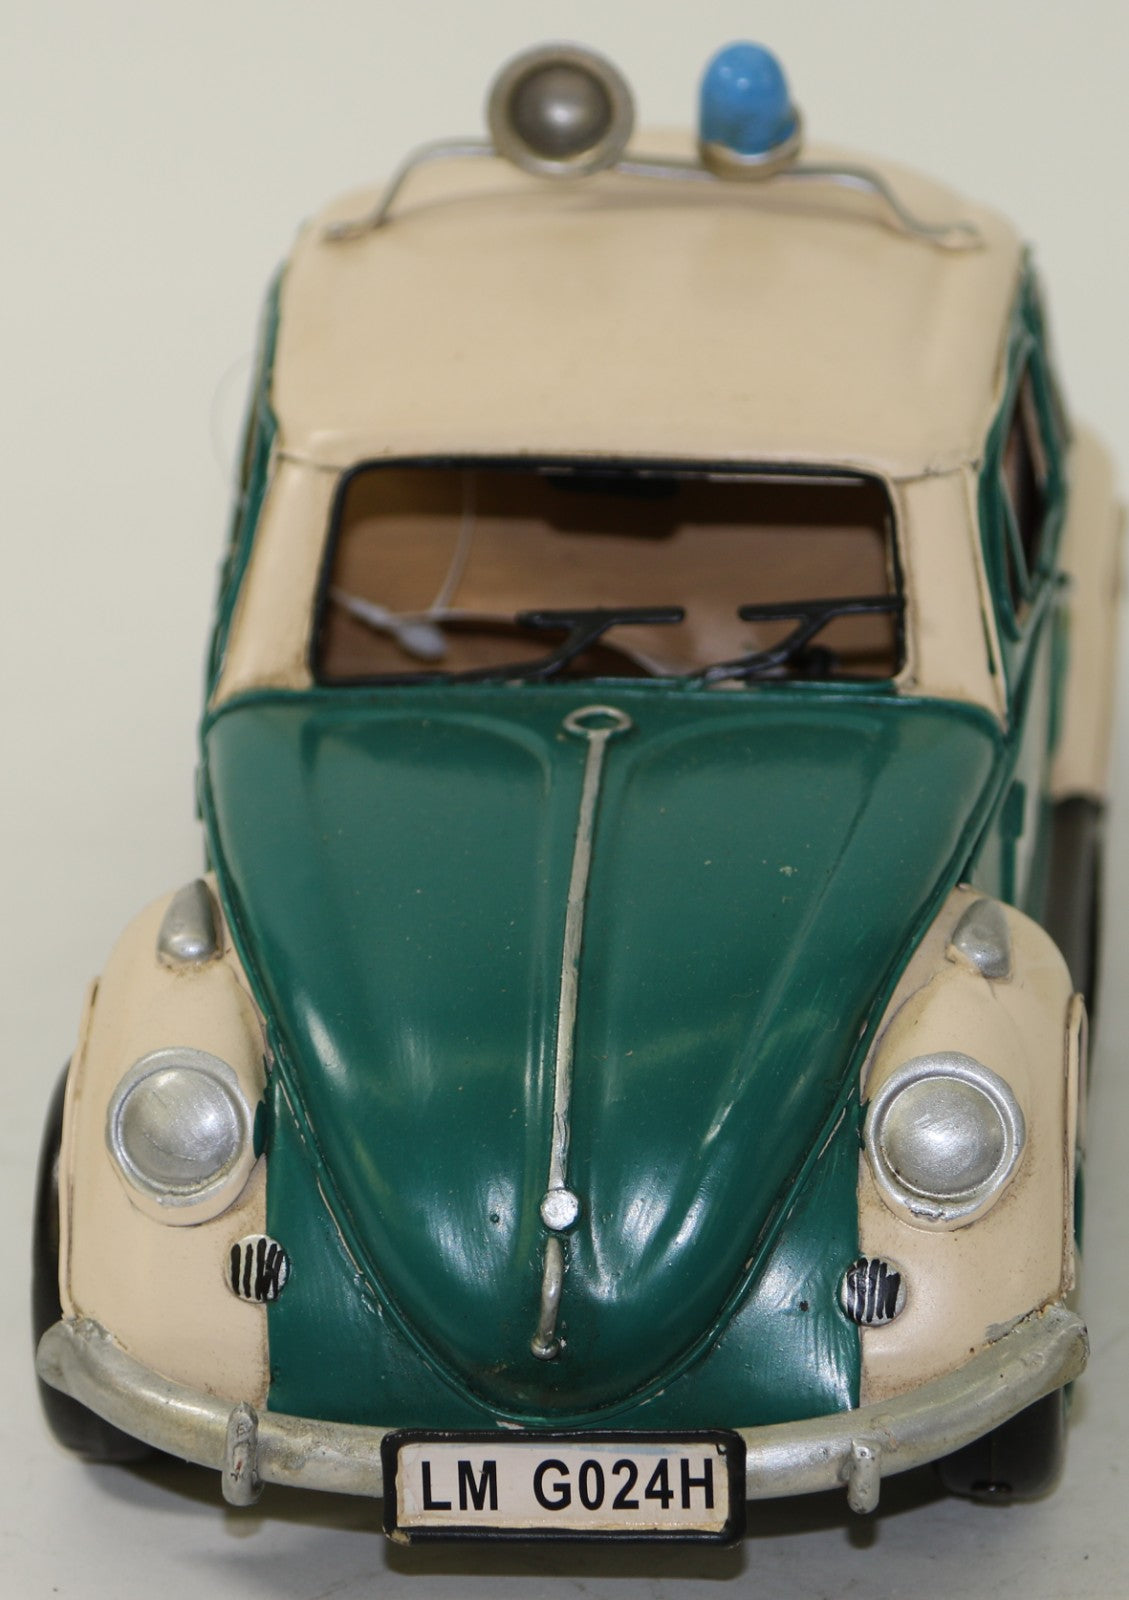 13" European 1967 Volkswagen Classical Beetle Police Car 1:12 Diecast Model Toy